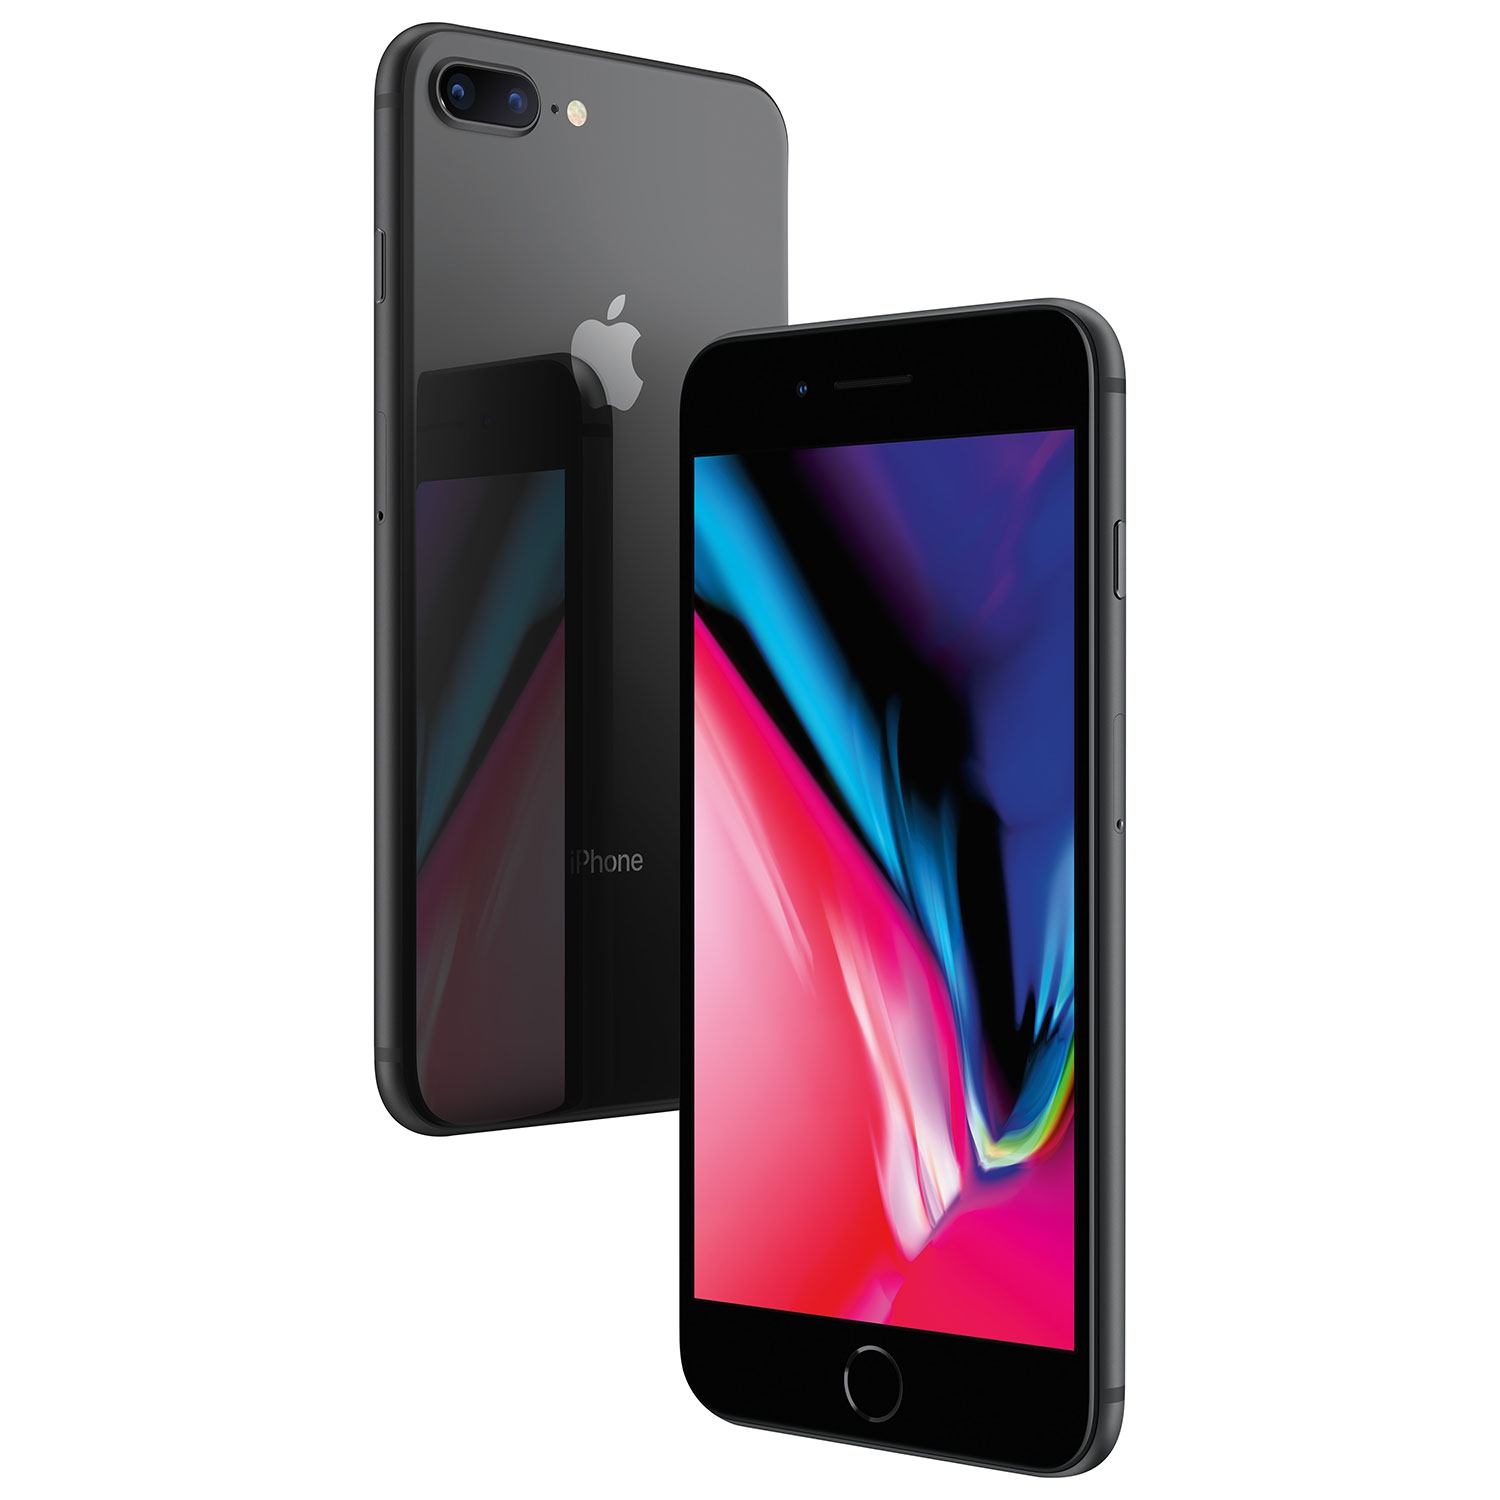 Apple iPhone 8 Plus 256GB Smartphone - Space Gray - Unlocked - Open Box